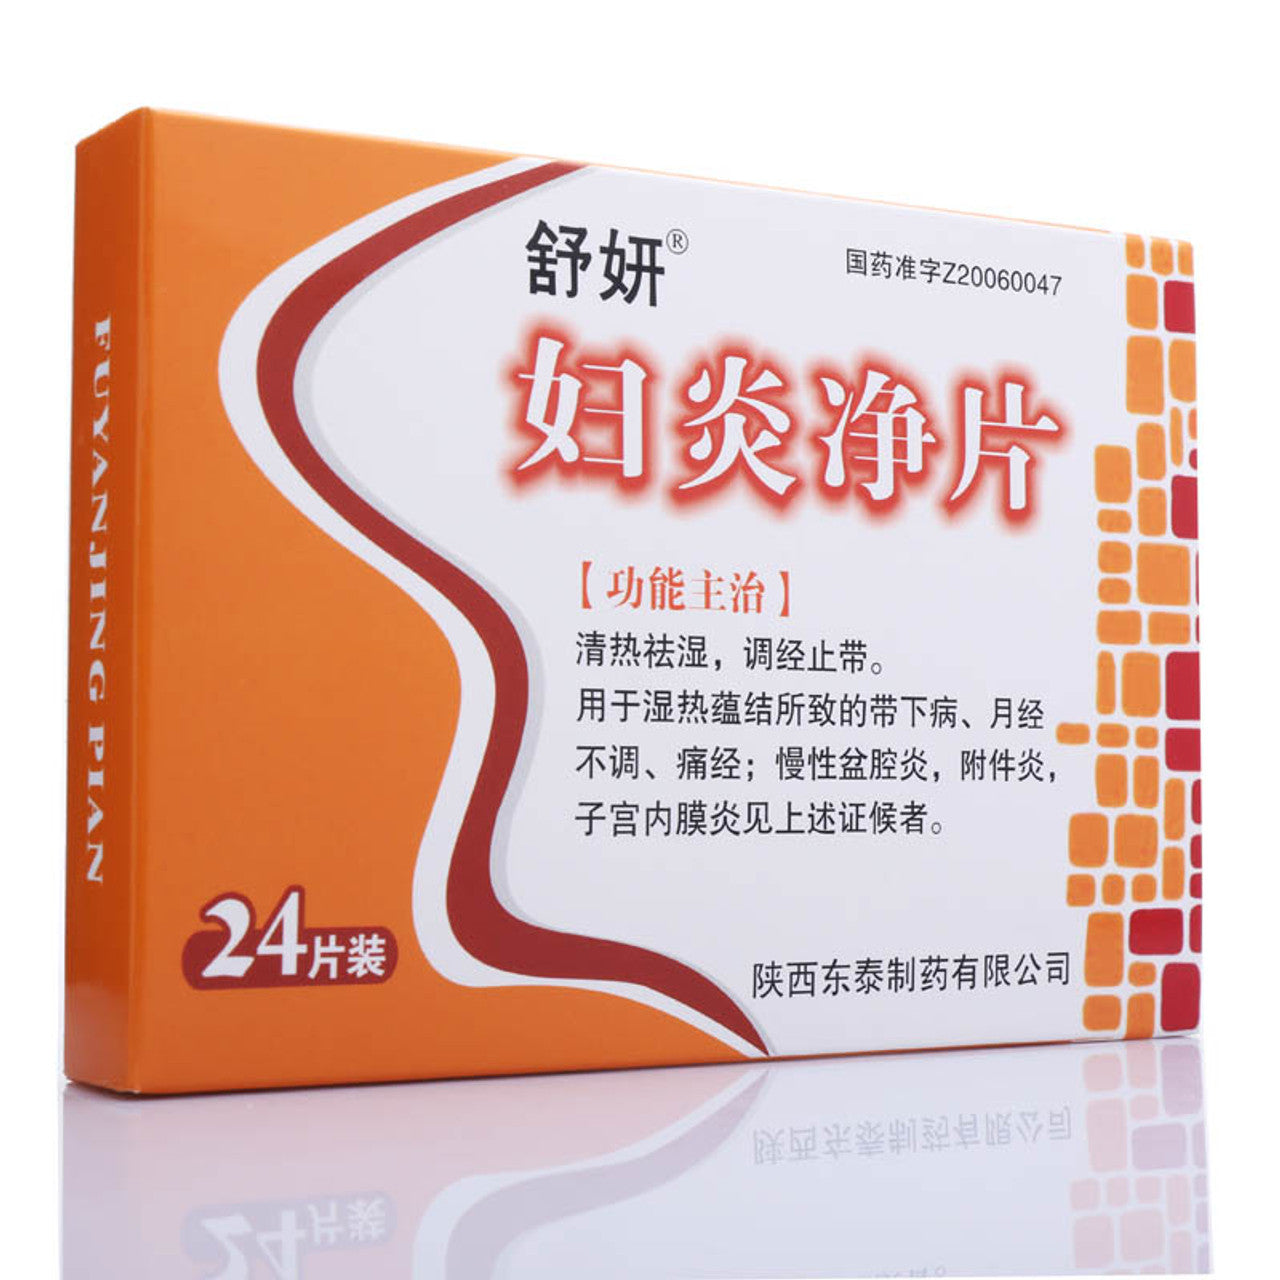 China Herb. Brand Dongtai. Fuyanjing Pian or Fu Yan Jing Pian or FuYanJingPian or Fuyanjing Tablets or Fu Yan Jing Tablets for chronic pelvic inflammatory disease, adnexitis, and endometritis